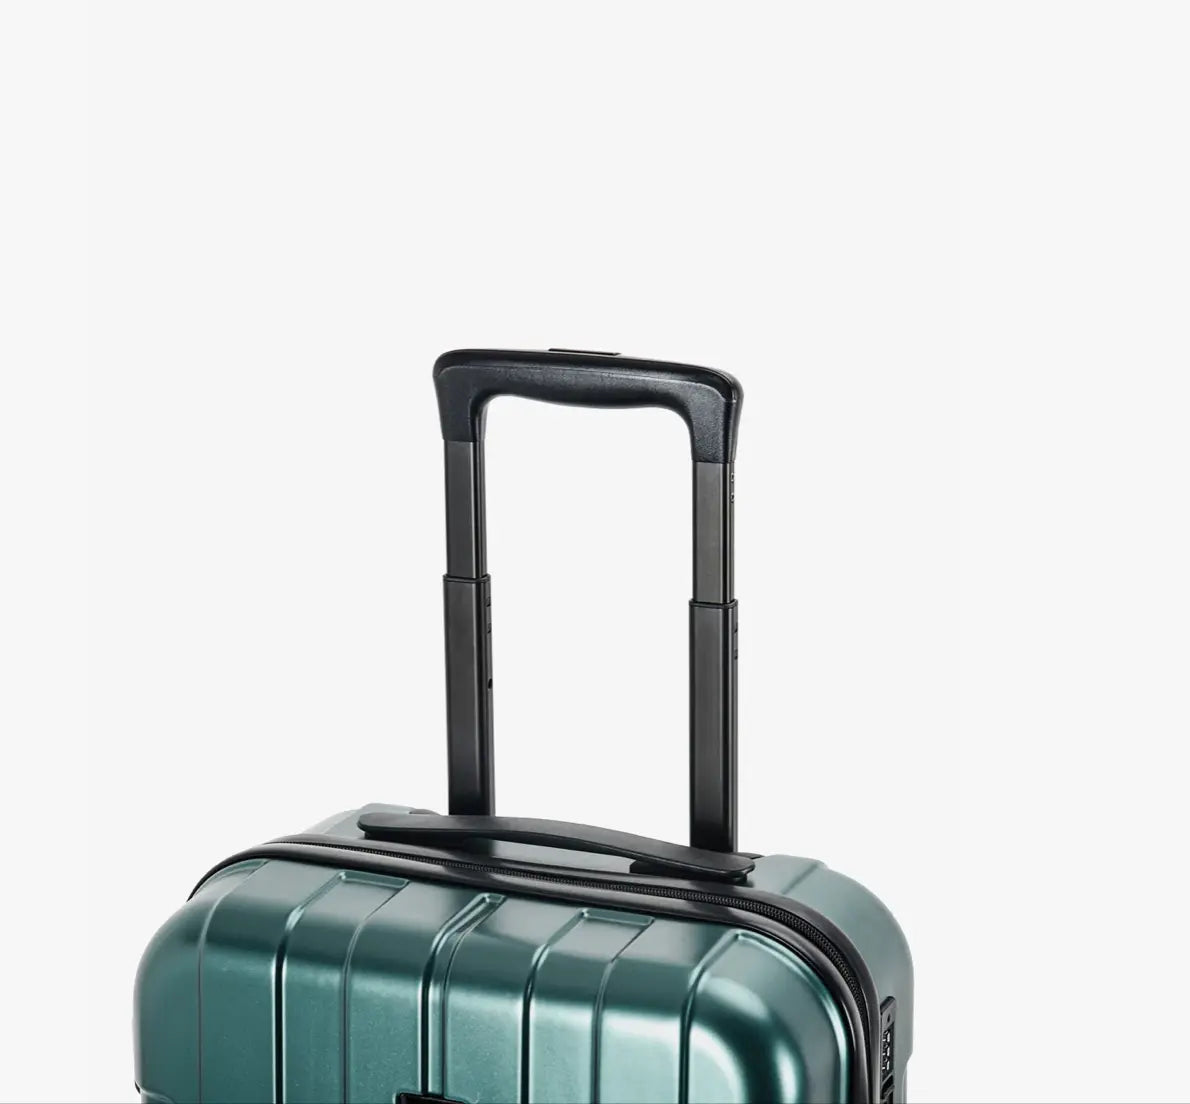 Adax miley kuffert grøn oppefra med håndtag